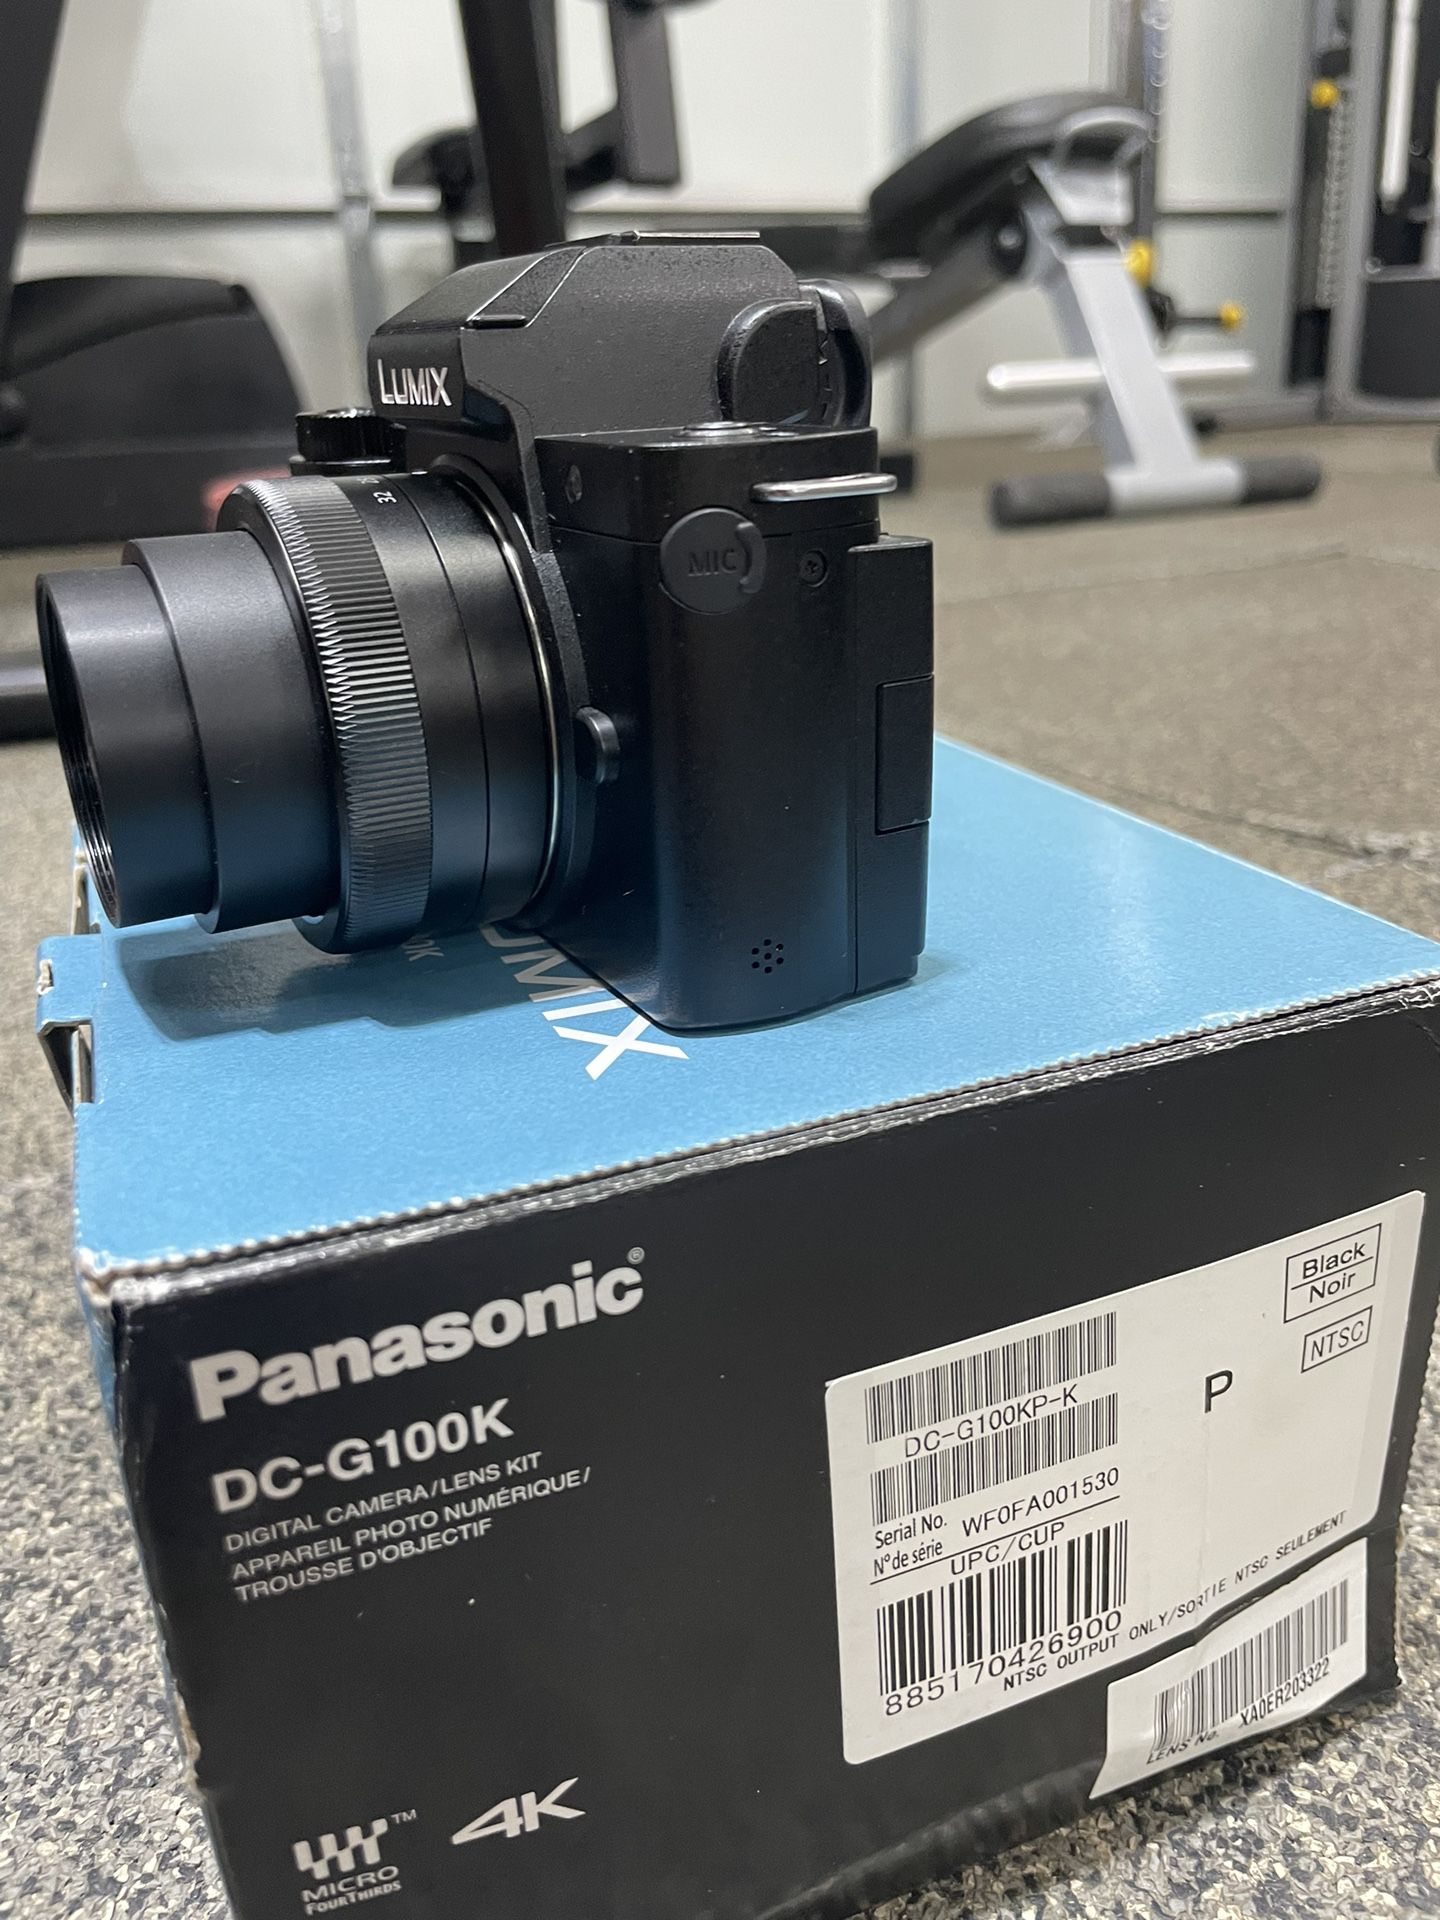 Panasonic - LUMIX G100 Mirrorless Camera for Photo, 4K Video and Vlogging, 12-32mm Lens - DC-G100KK - Black Bundle 